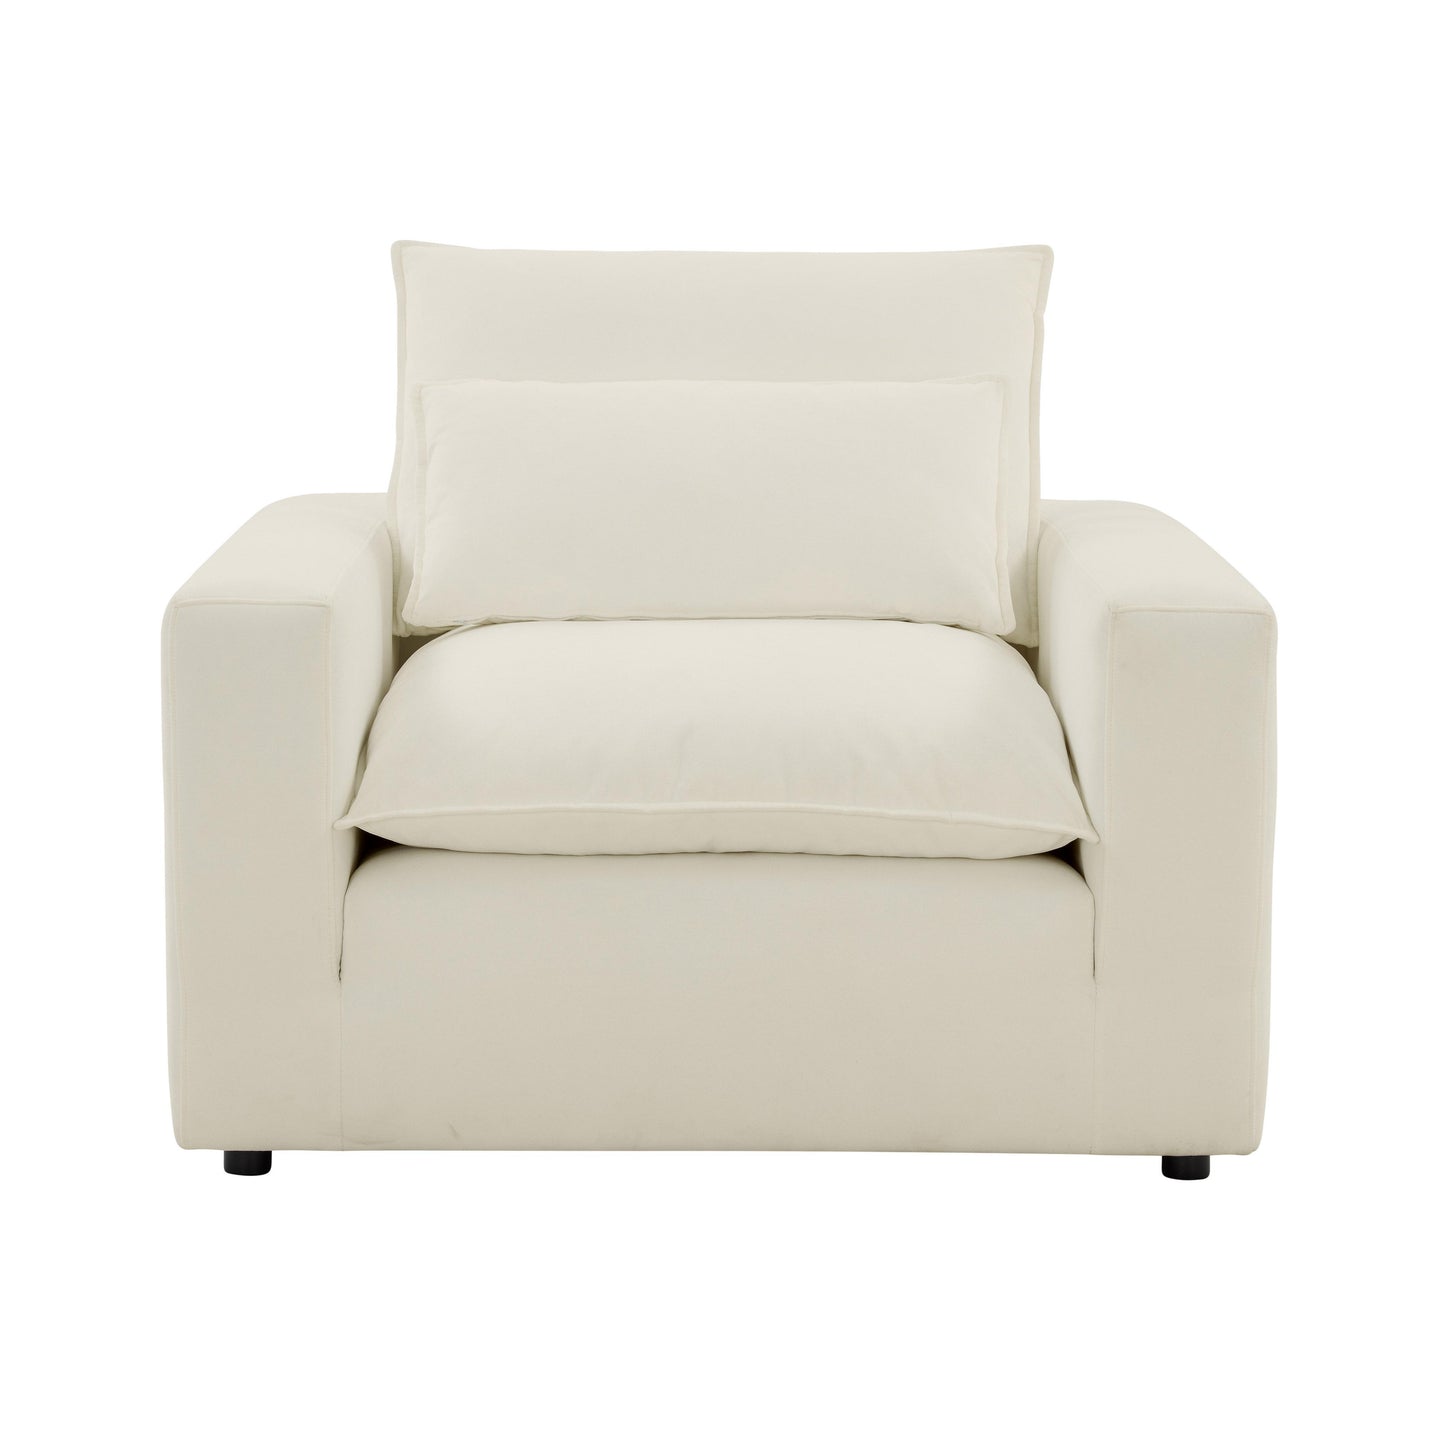 Tov Furniture Cali Natural Arm Chair